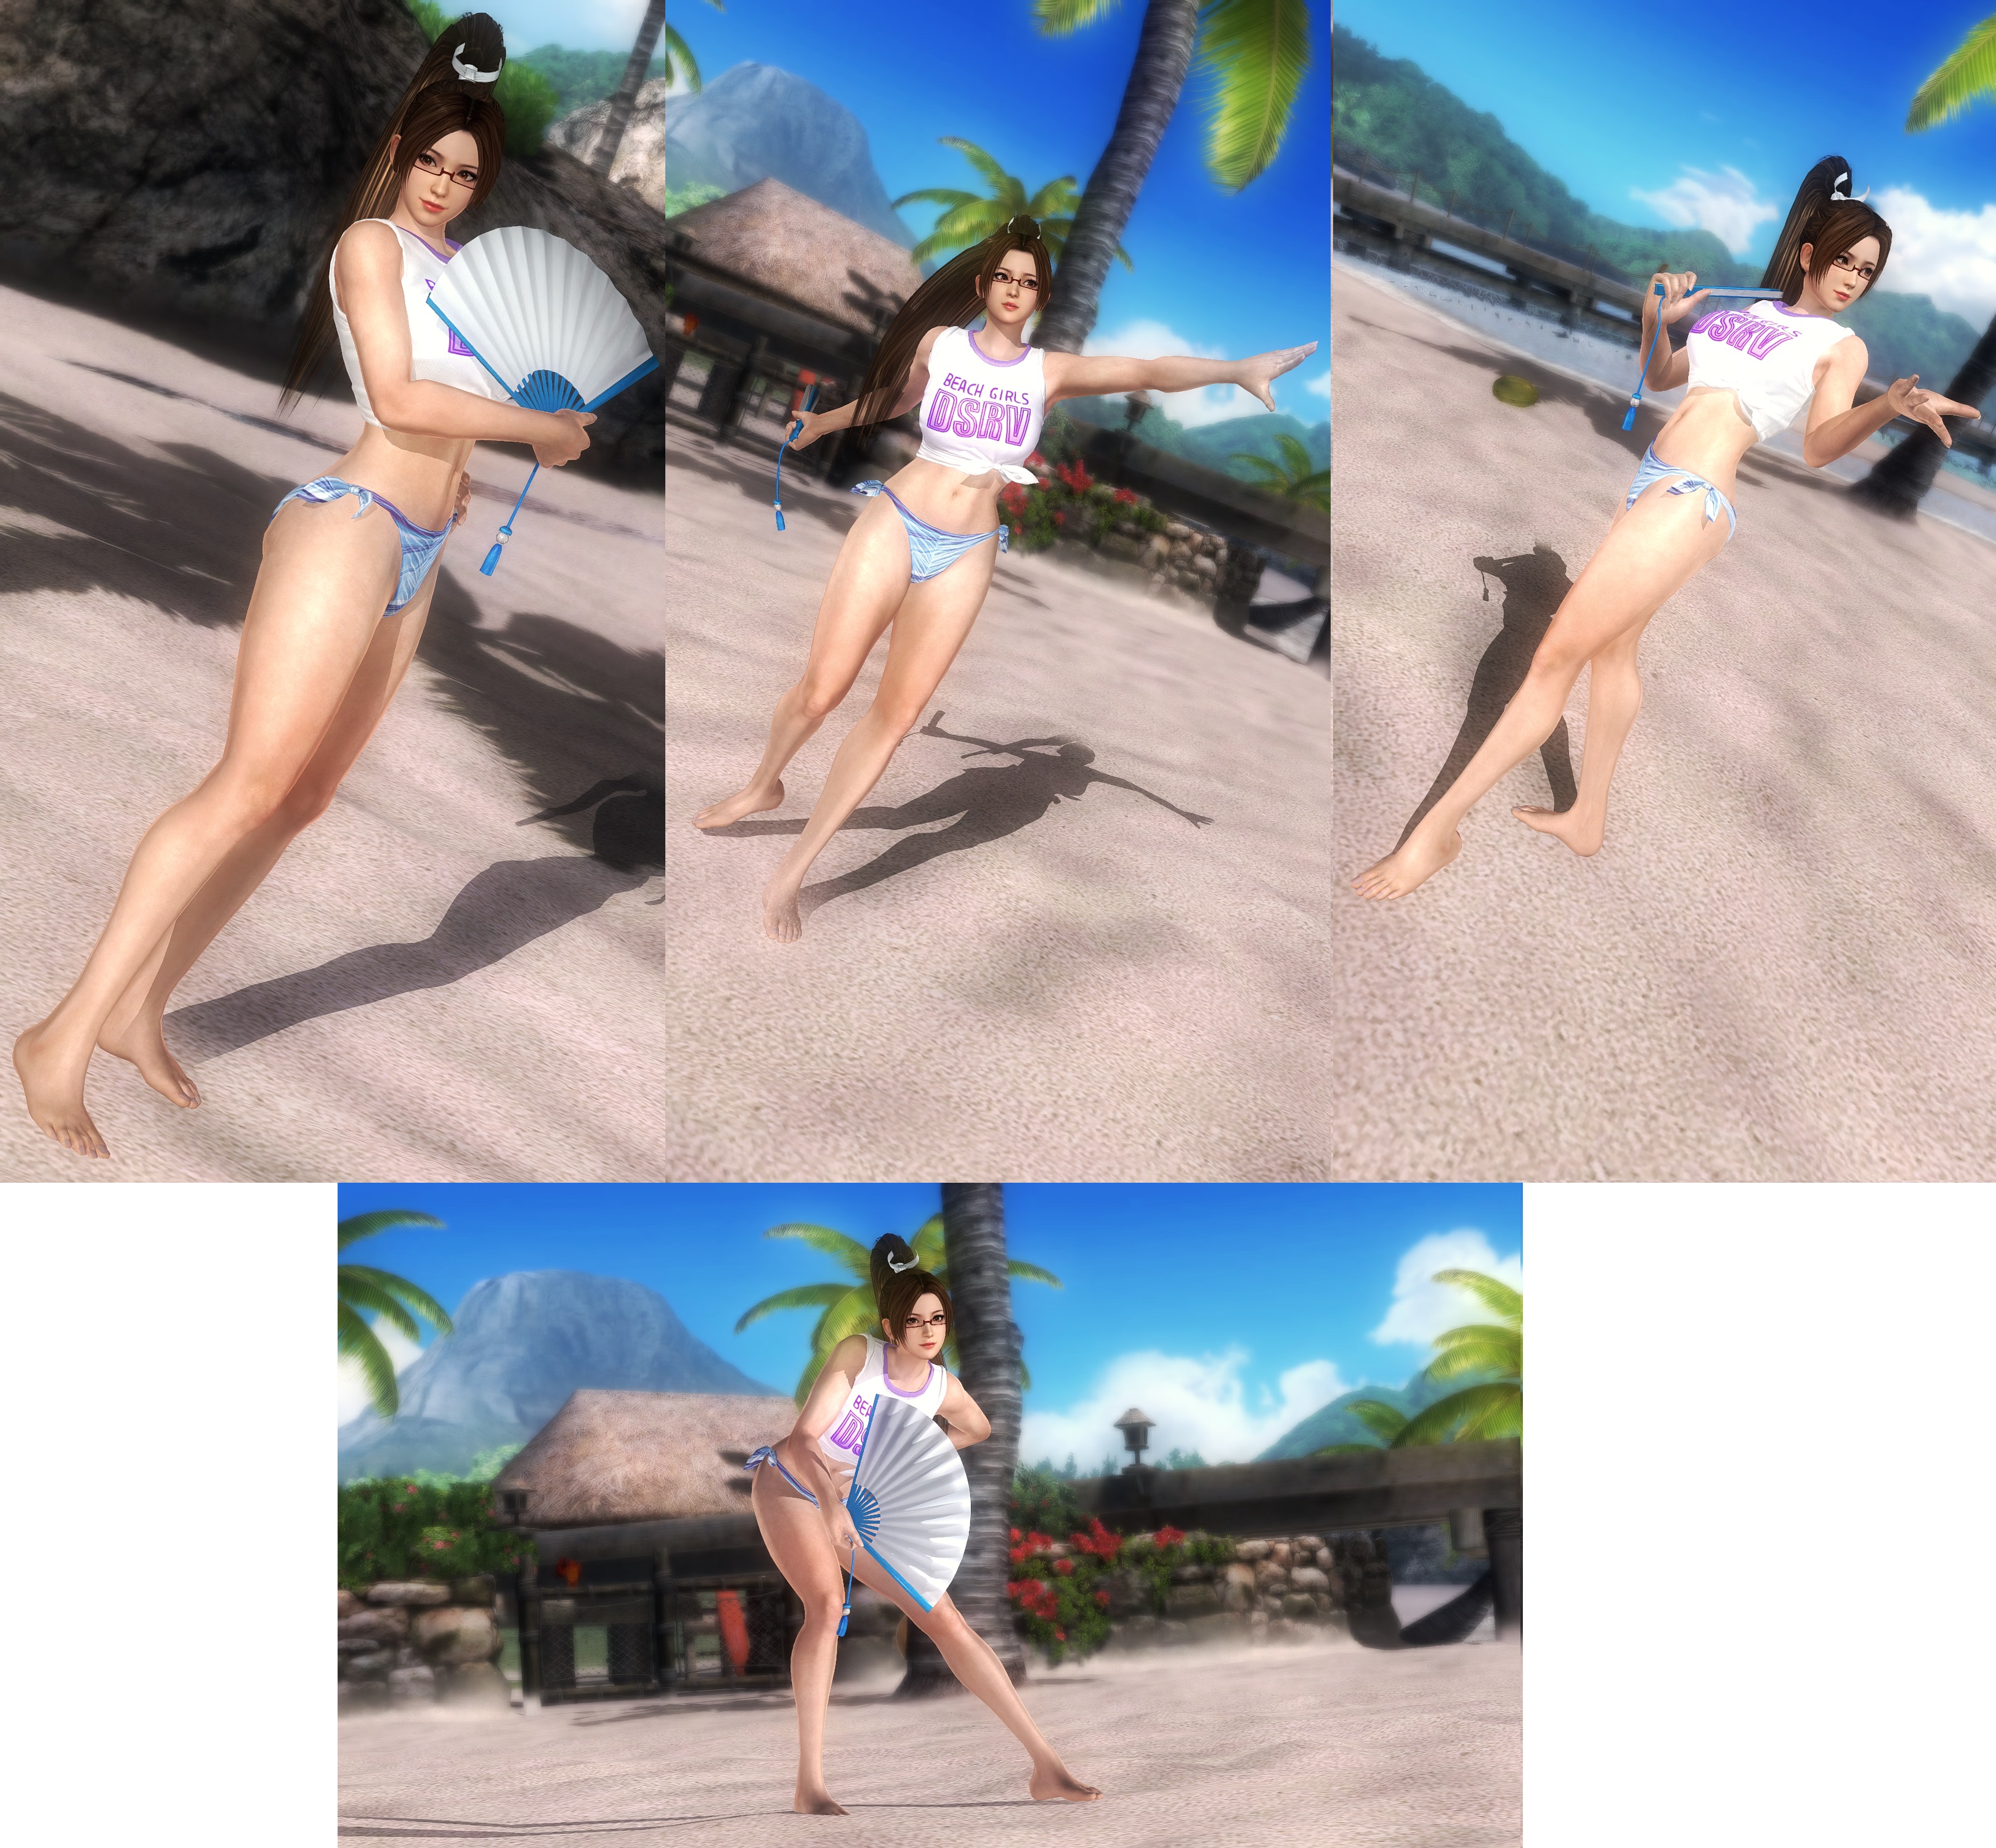 mai_beach_girls_by_bbbsfxt-dal9gdx.jpg